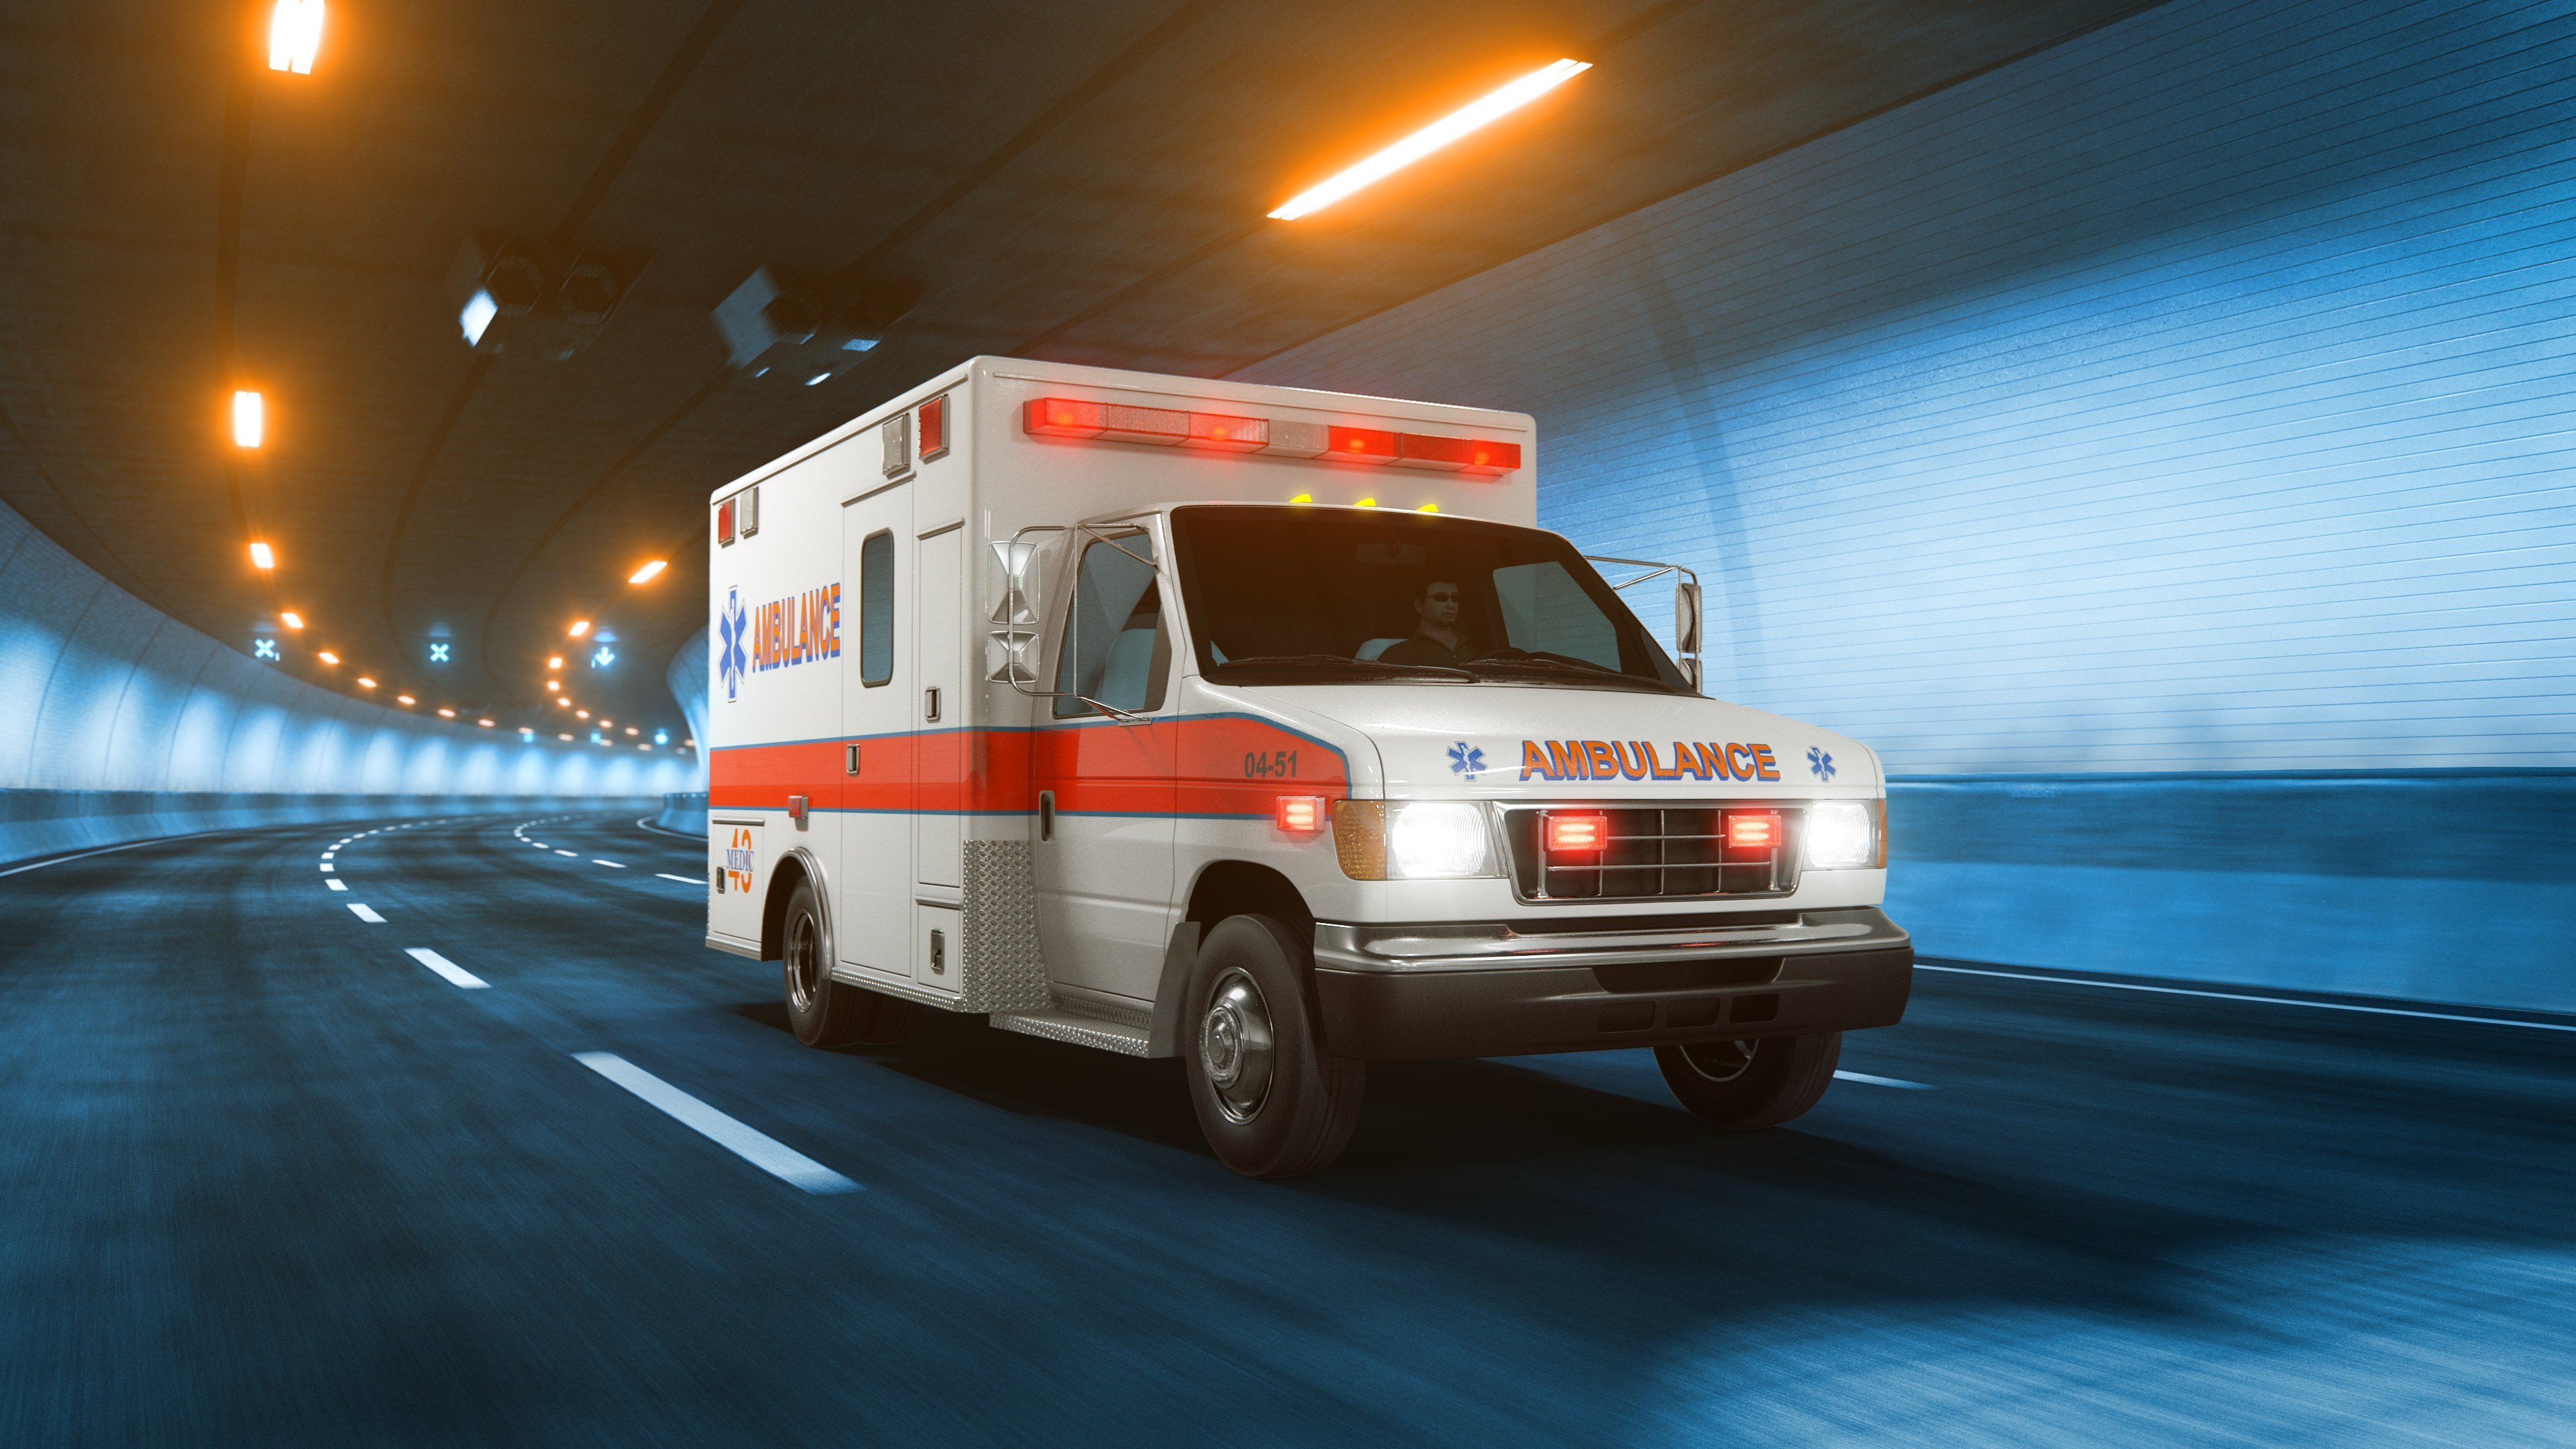 Ambulance car rides trough tunnel. Photo: Shutterstock